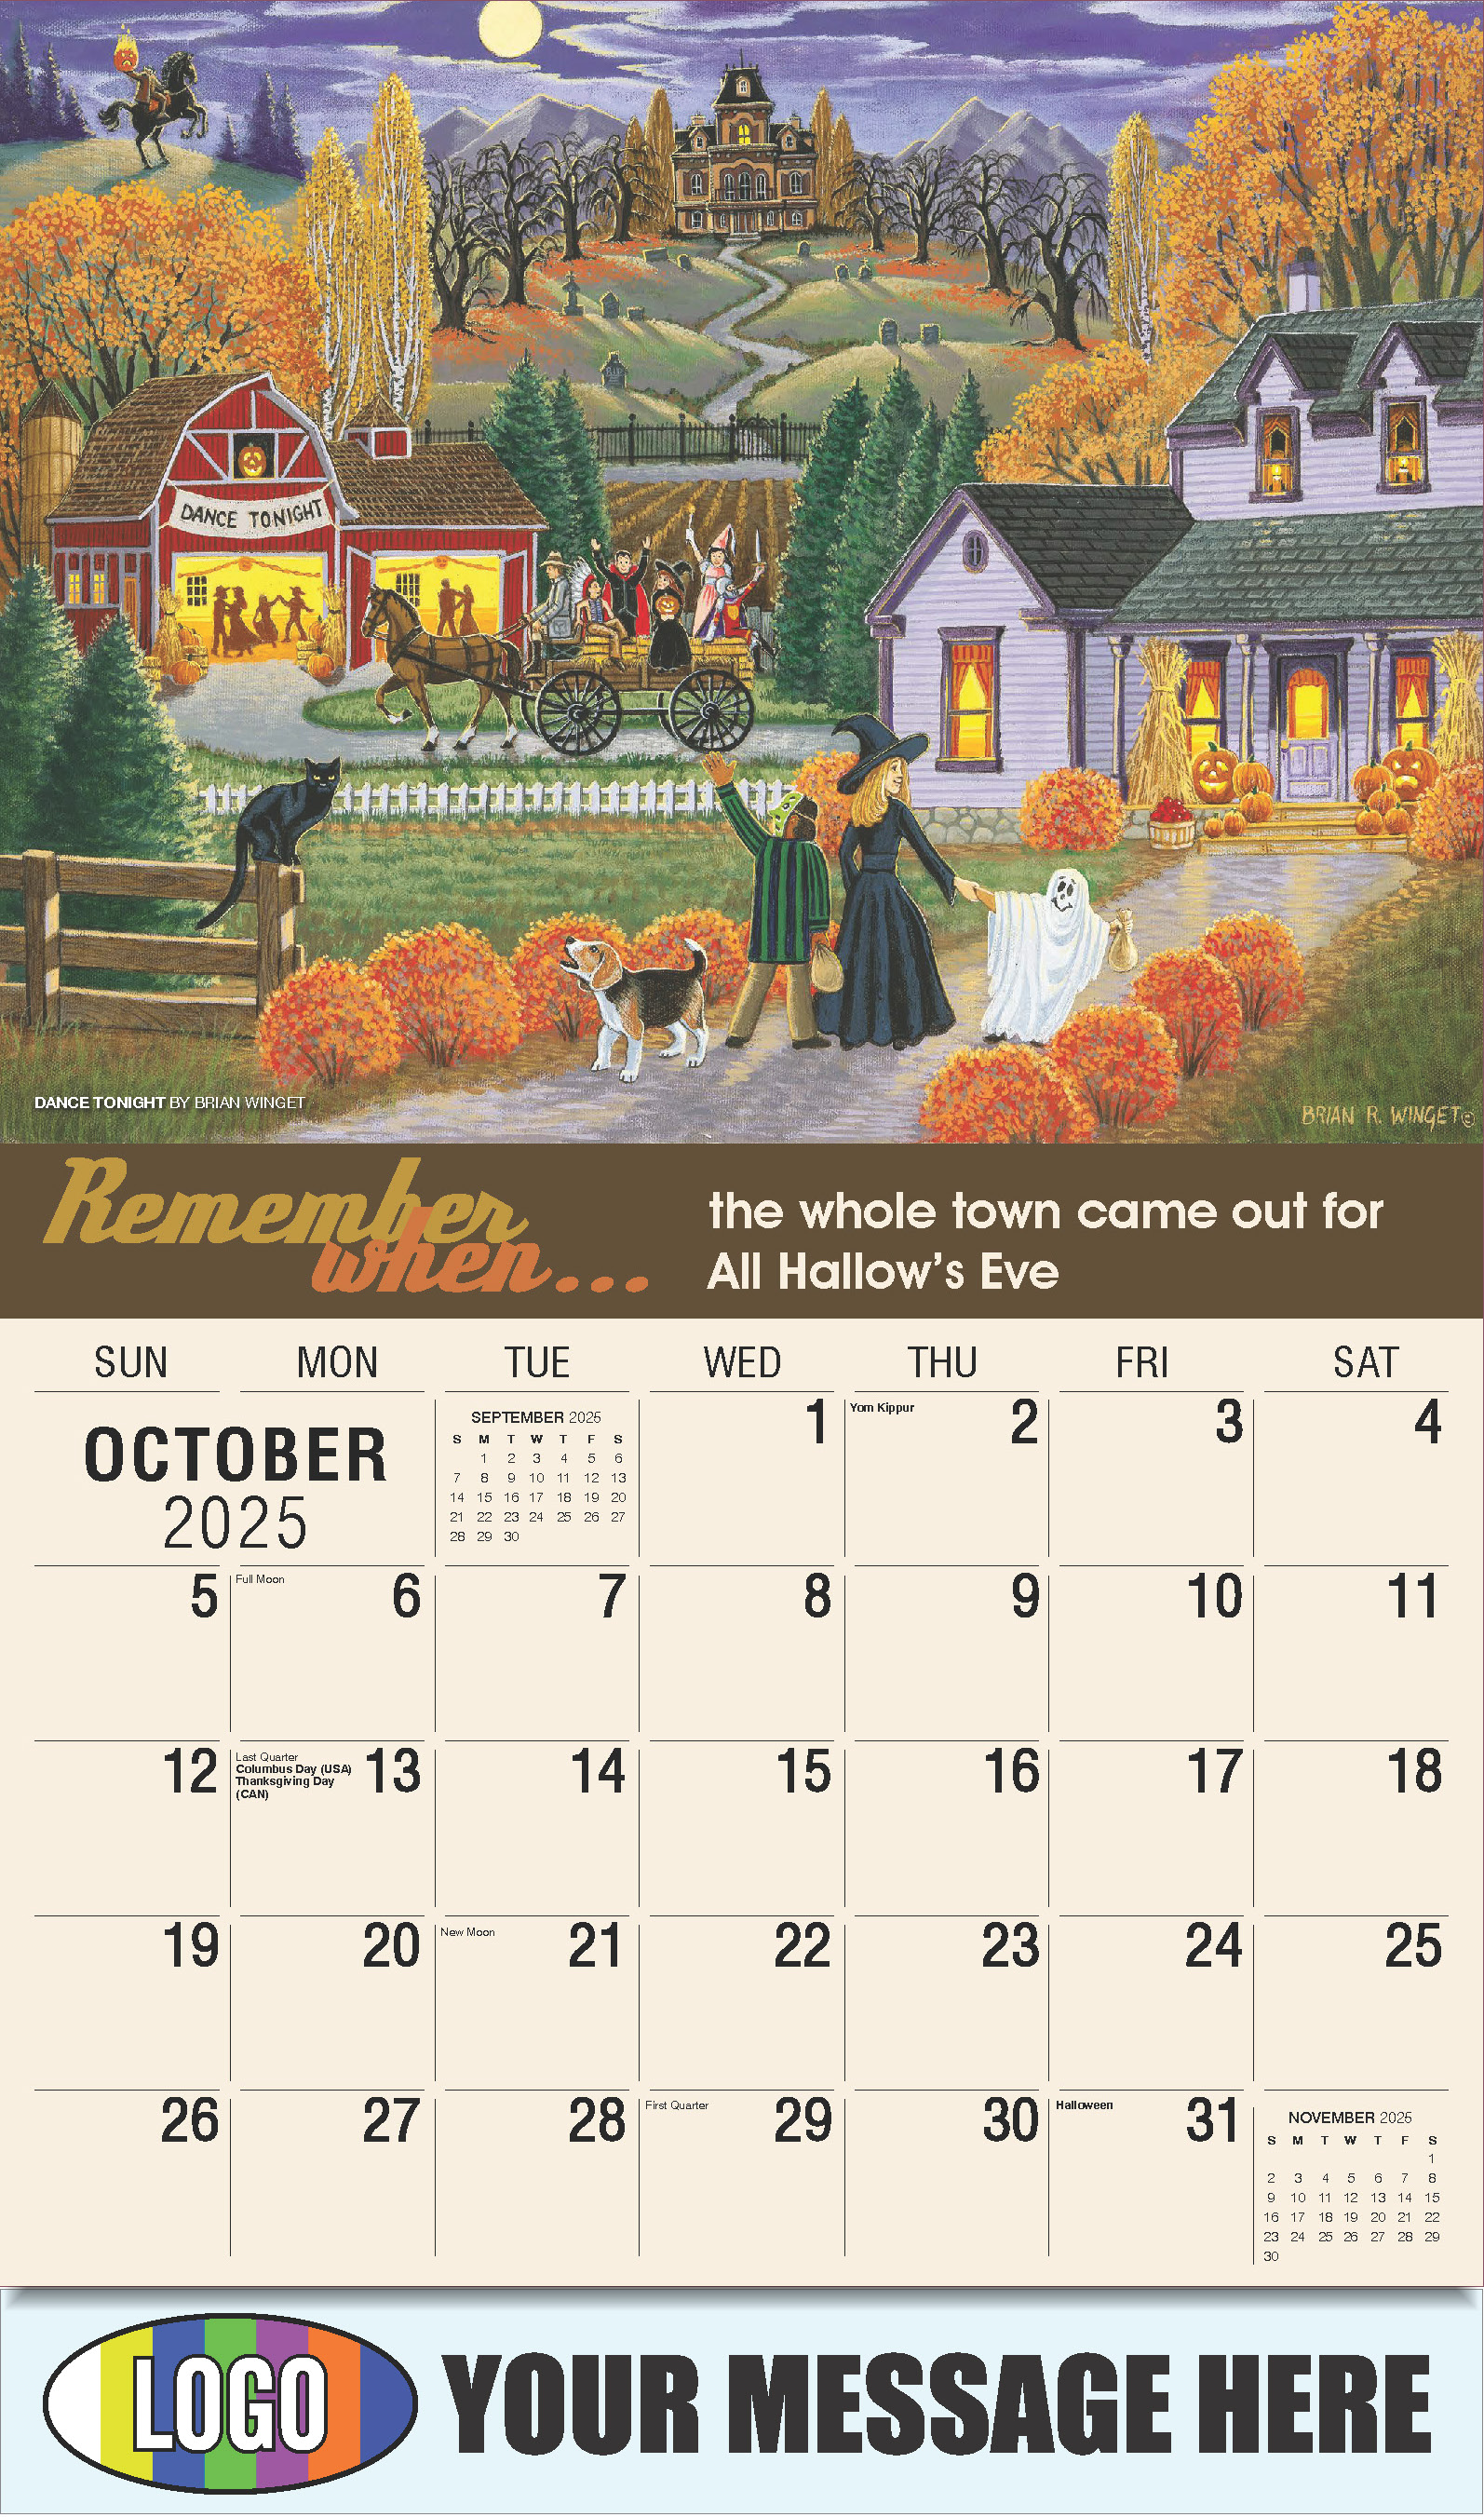 Remember When 2025 Business Advertising Calendar - October